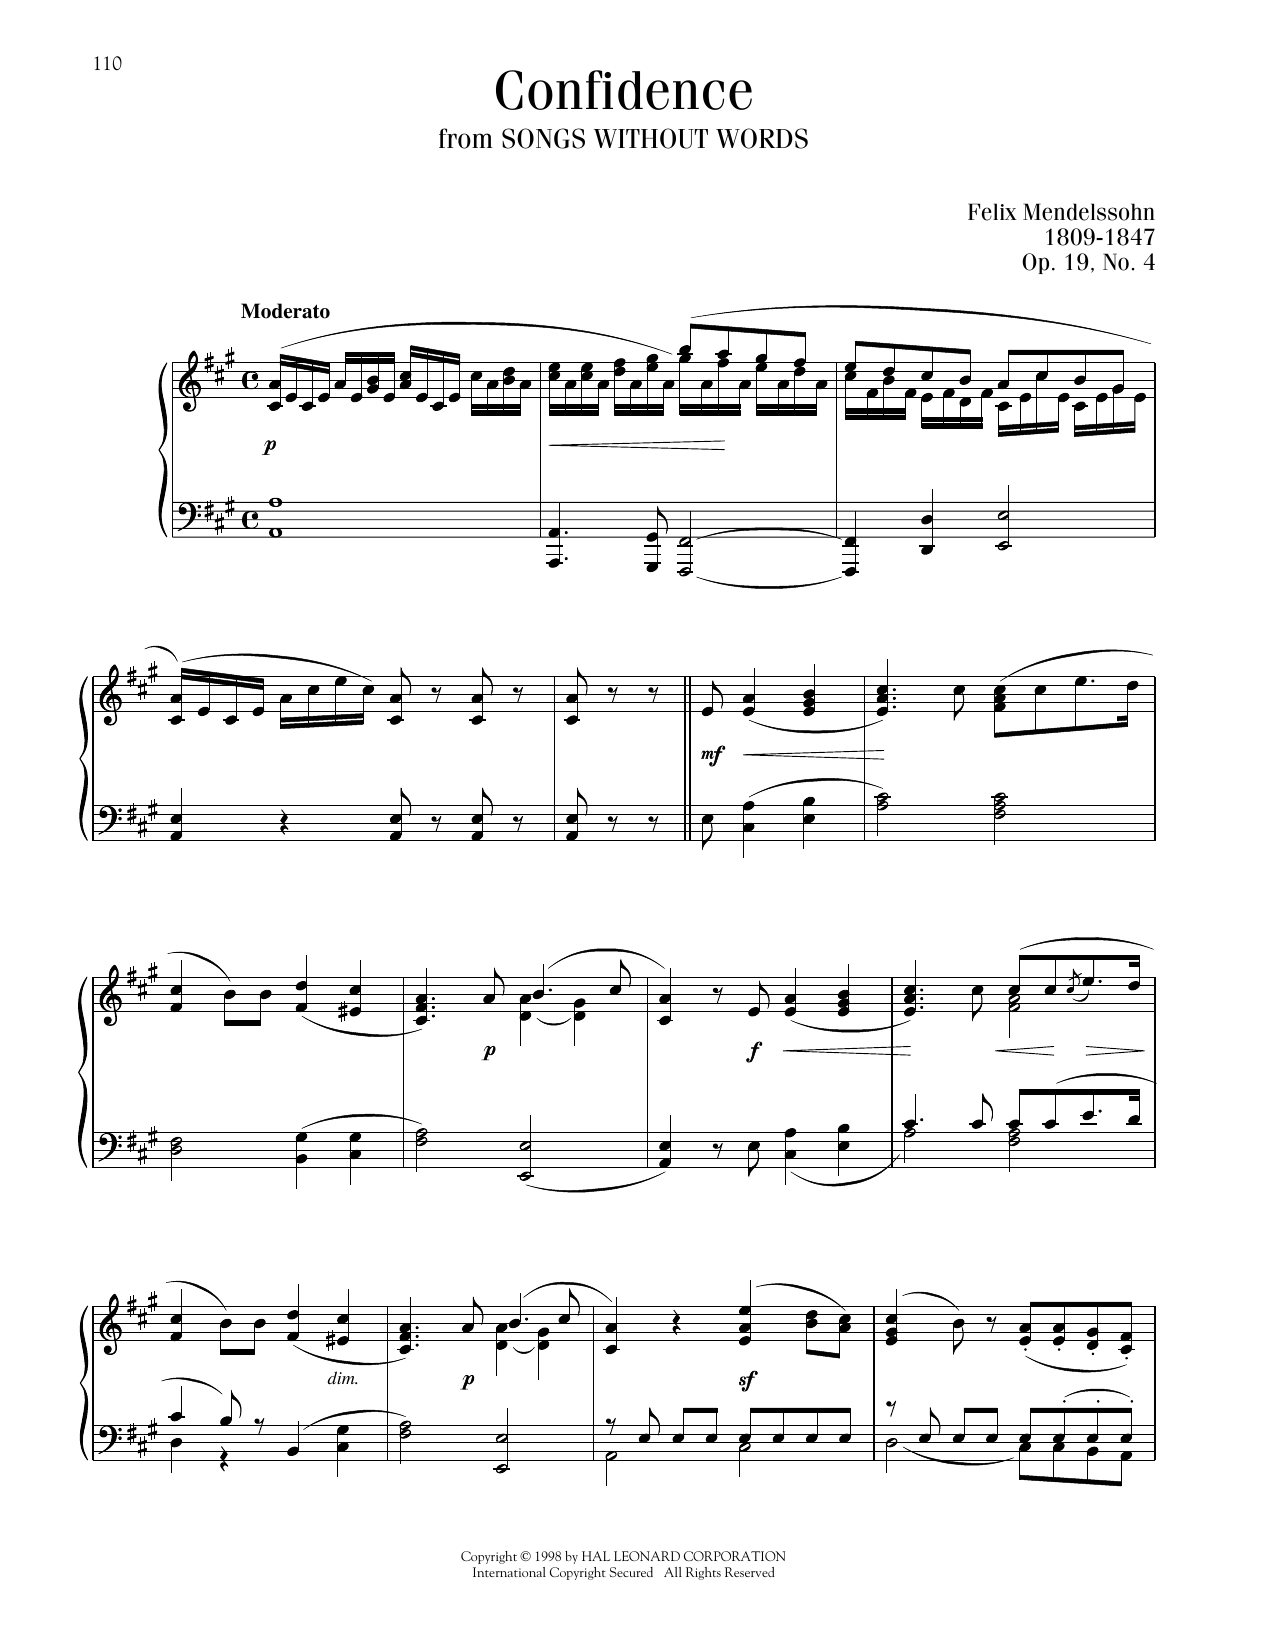 Felix Mendelssohn Song Without Words, Op. 19, No. 4 sheet music notes printable PDF score